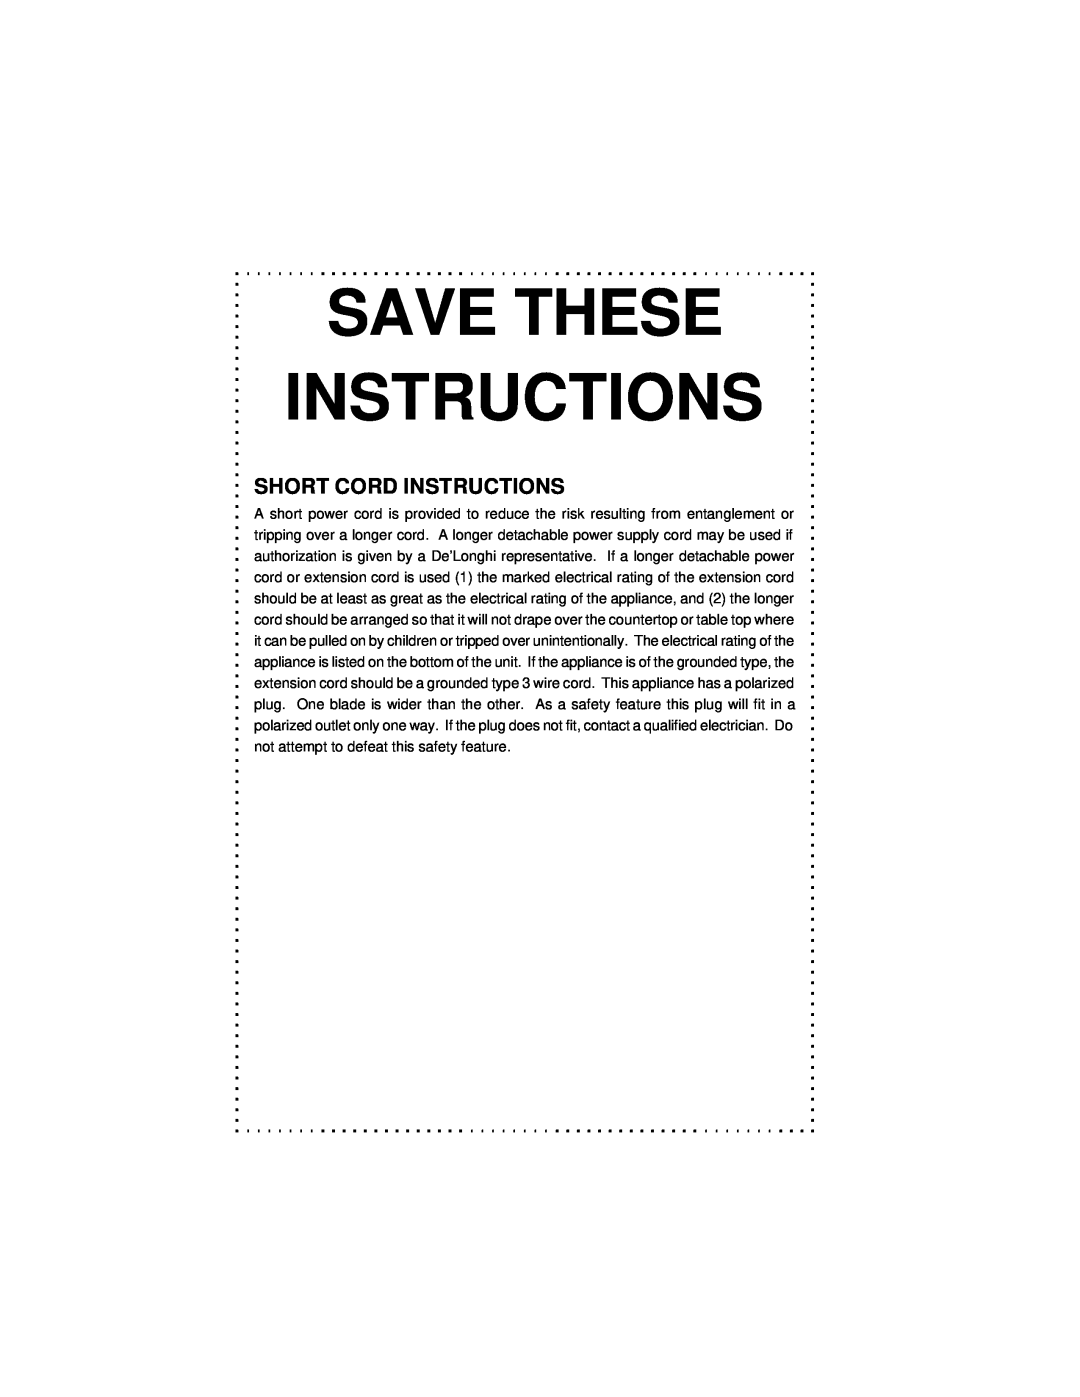 DeLonghi DFG440 Series instruction manual Save These Instructions, Short Cord Instructions 